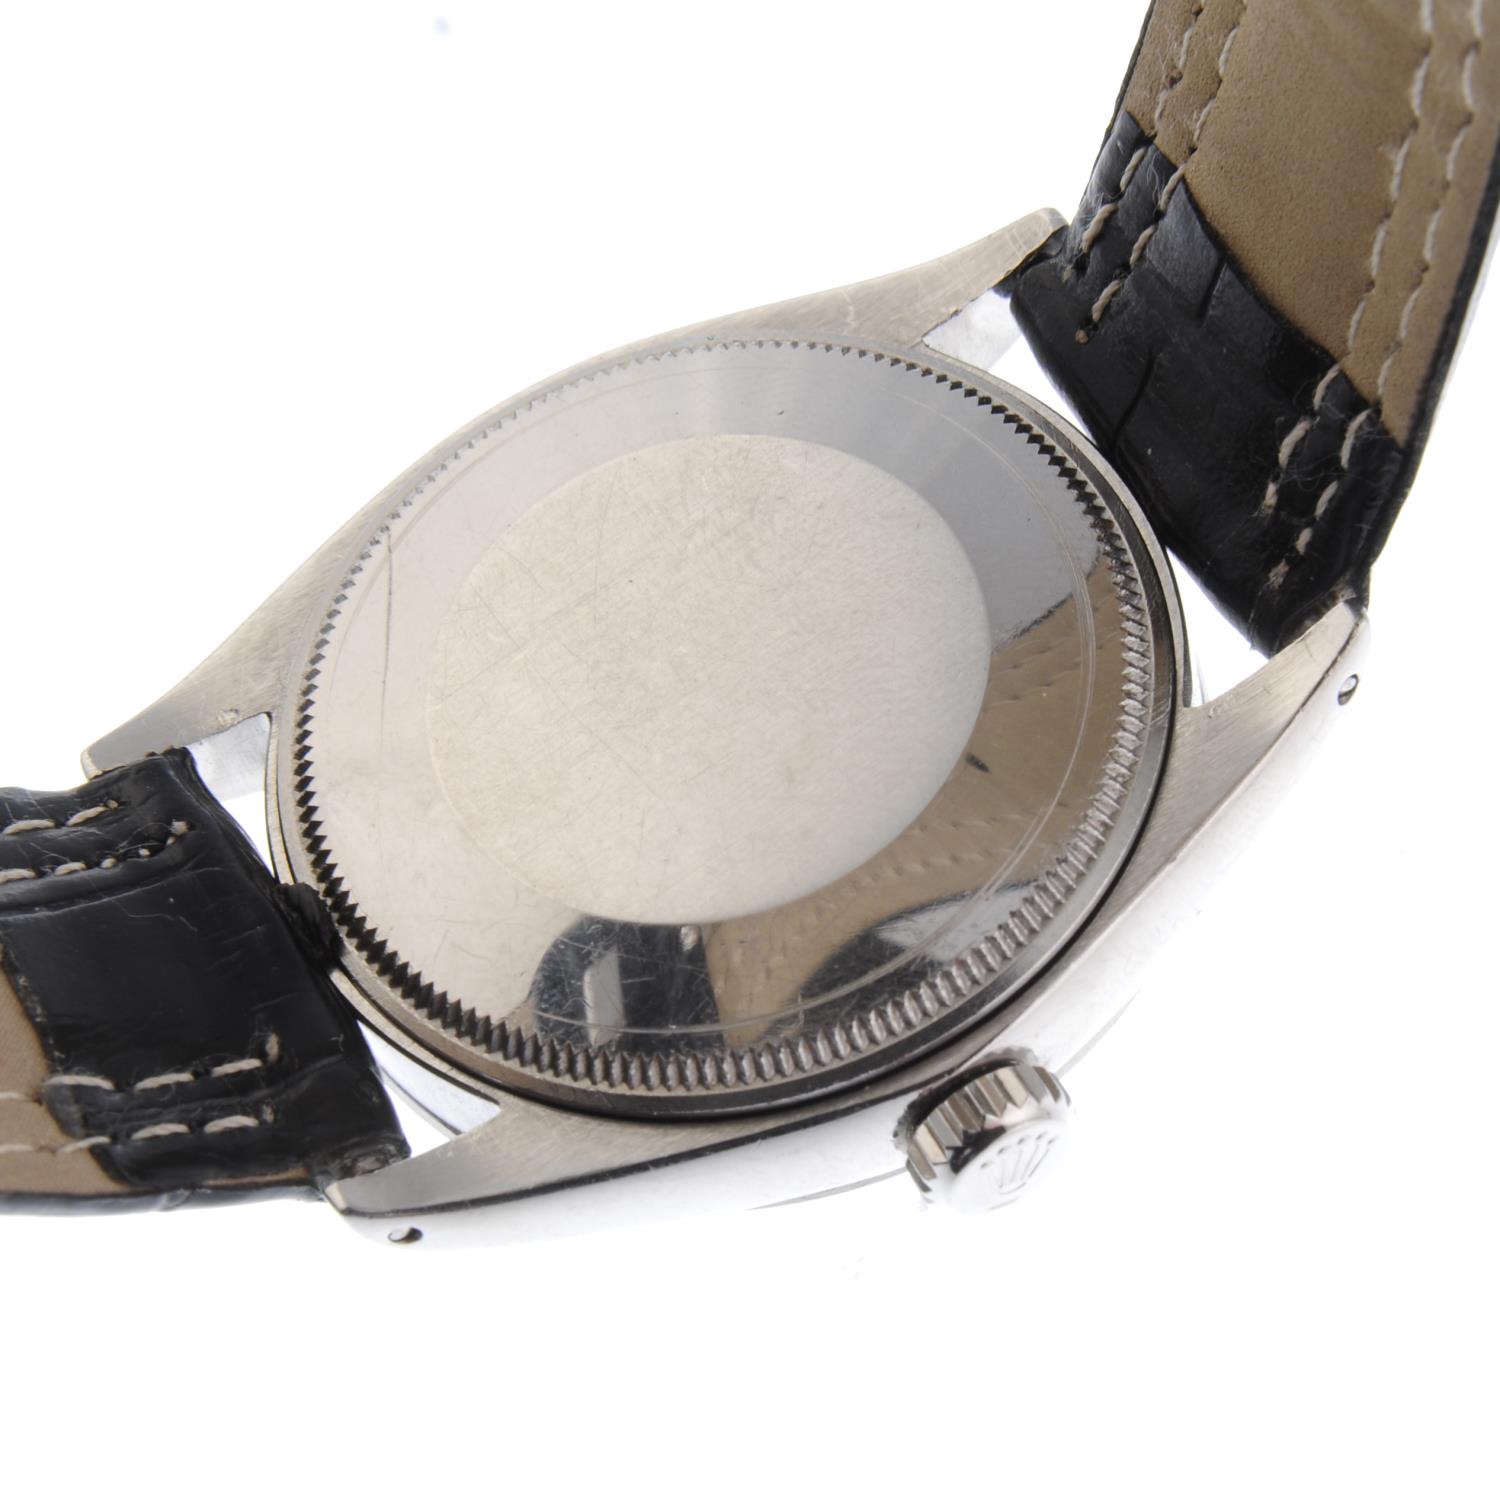 ROLEX - a gentleman's Oyster Perpetual Explorer wrist watch. - Image 4 of 4